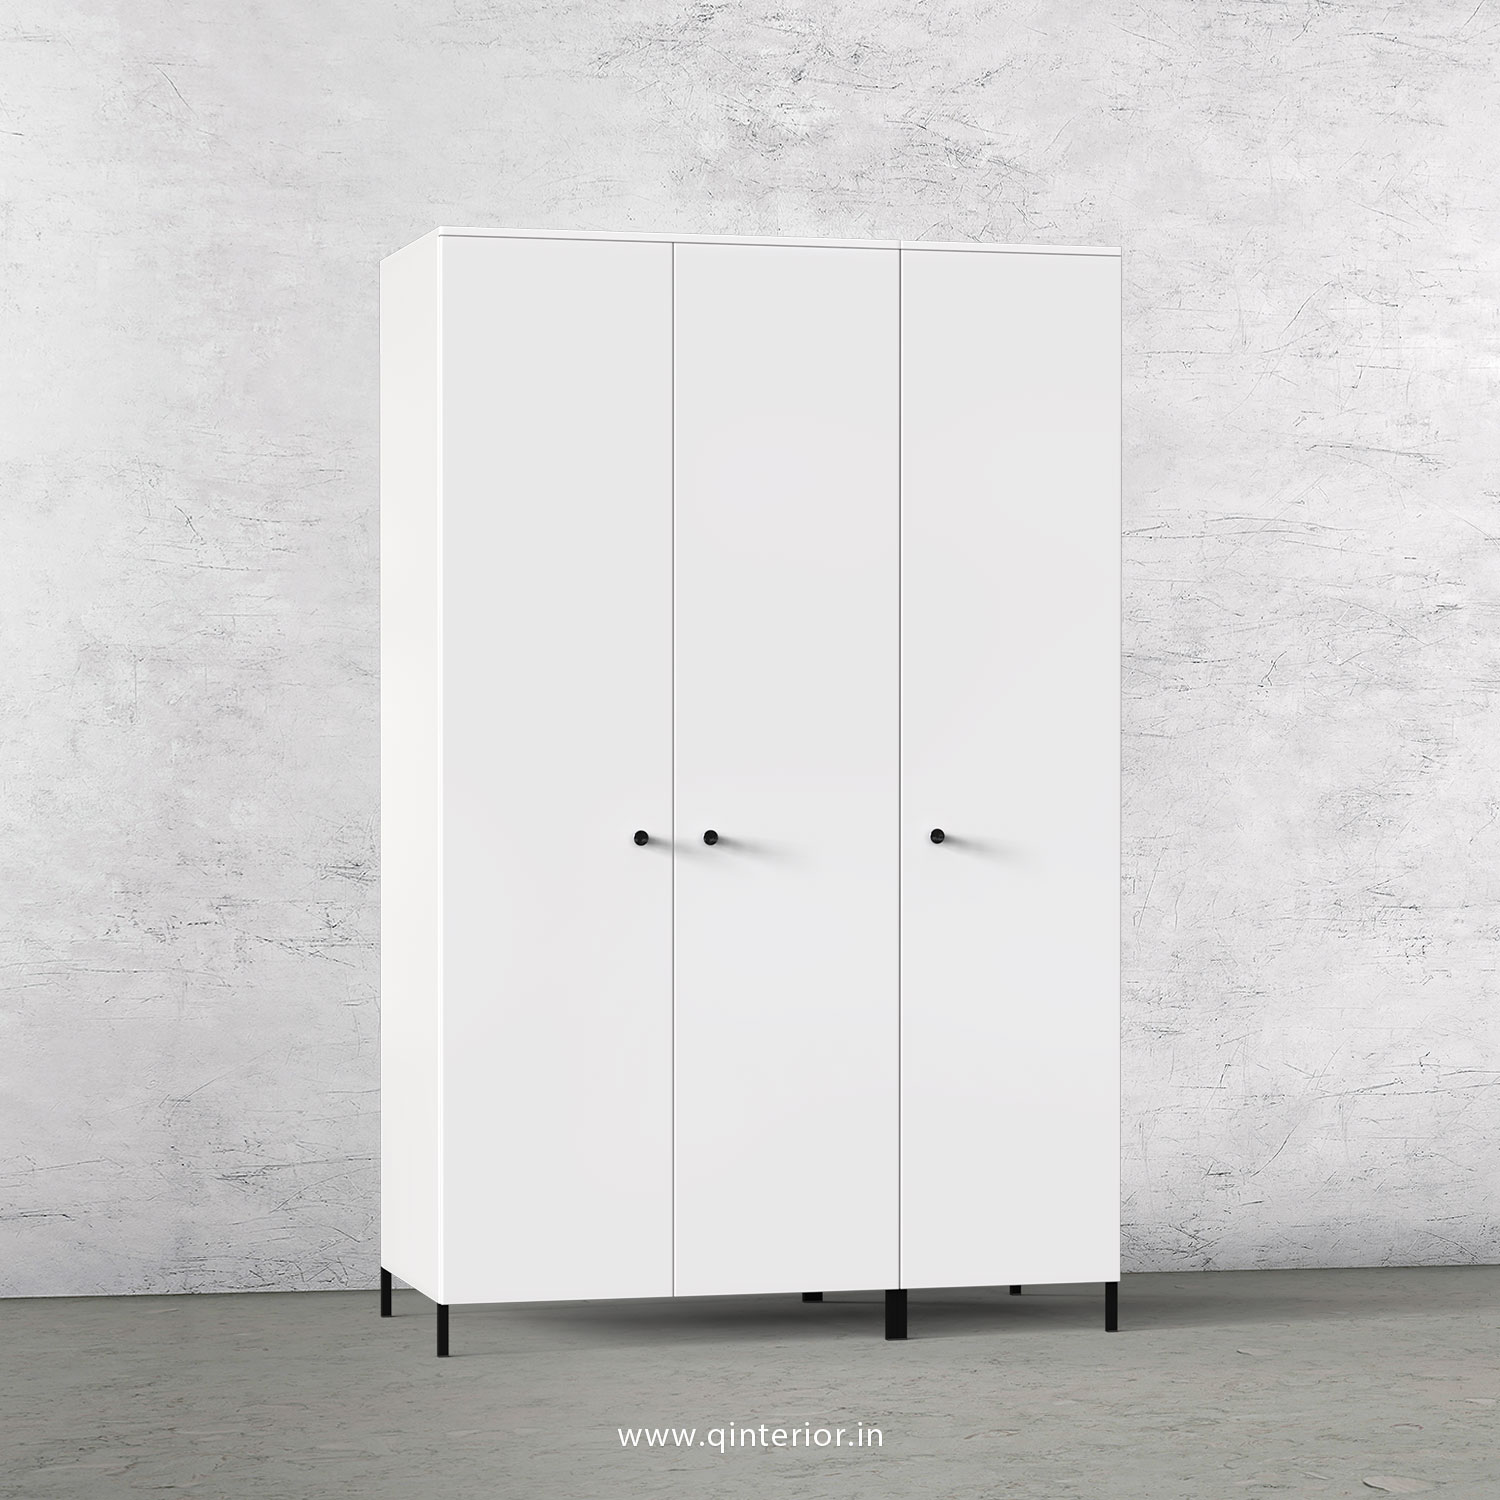 Stable 3 Door Wardrobe in White Finish – TWRD001 C4